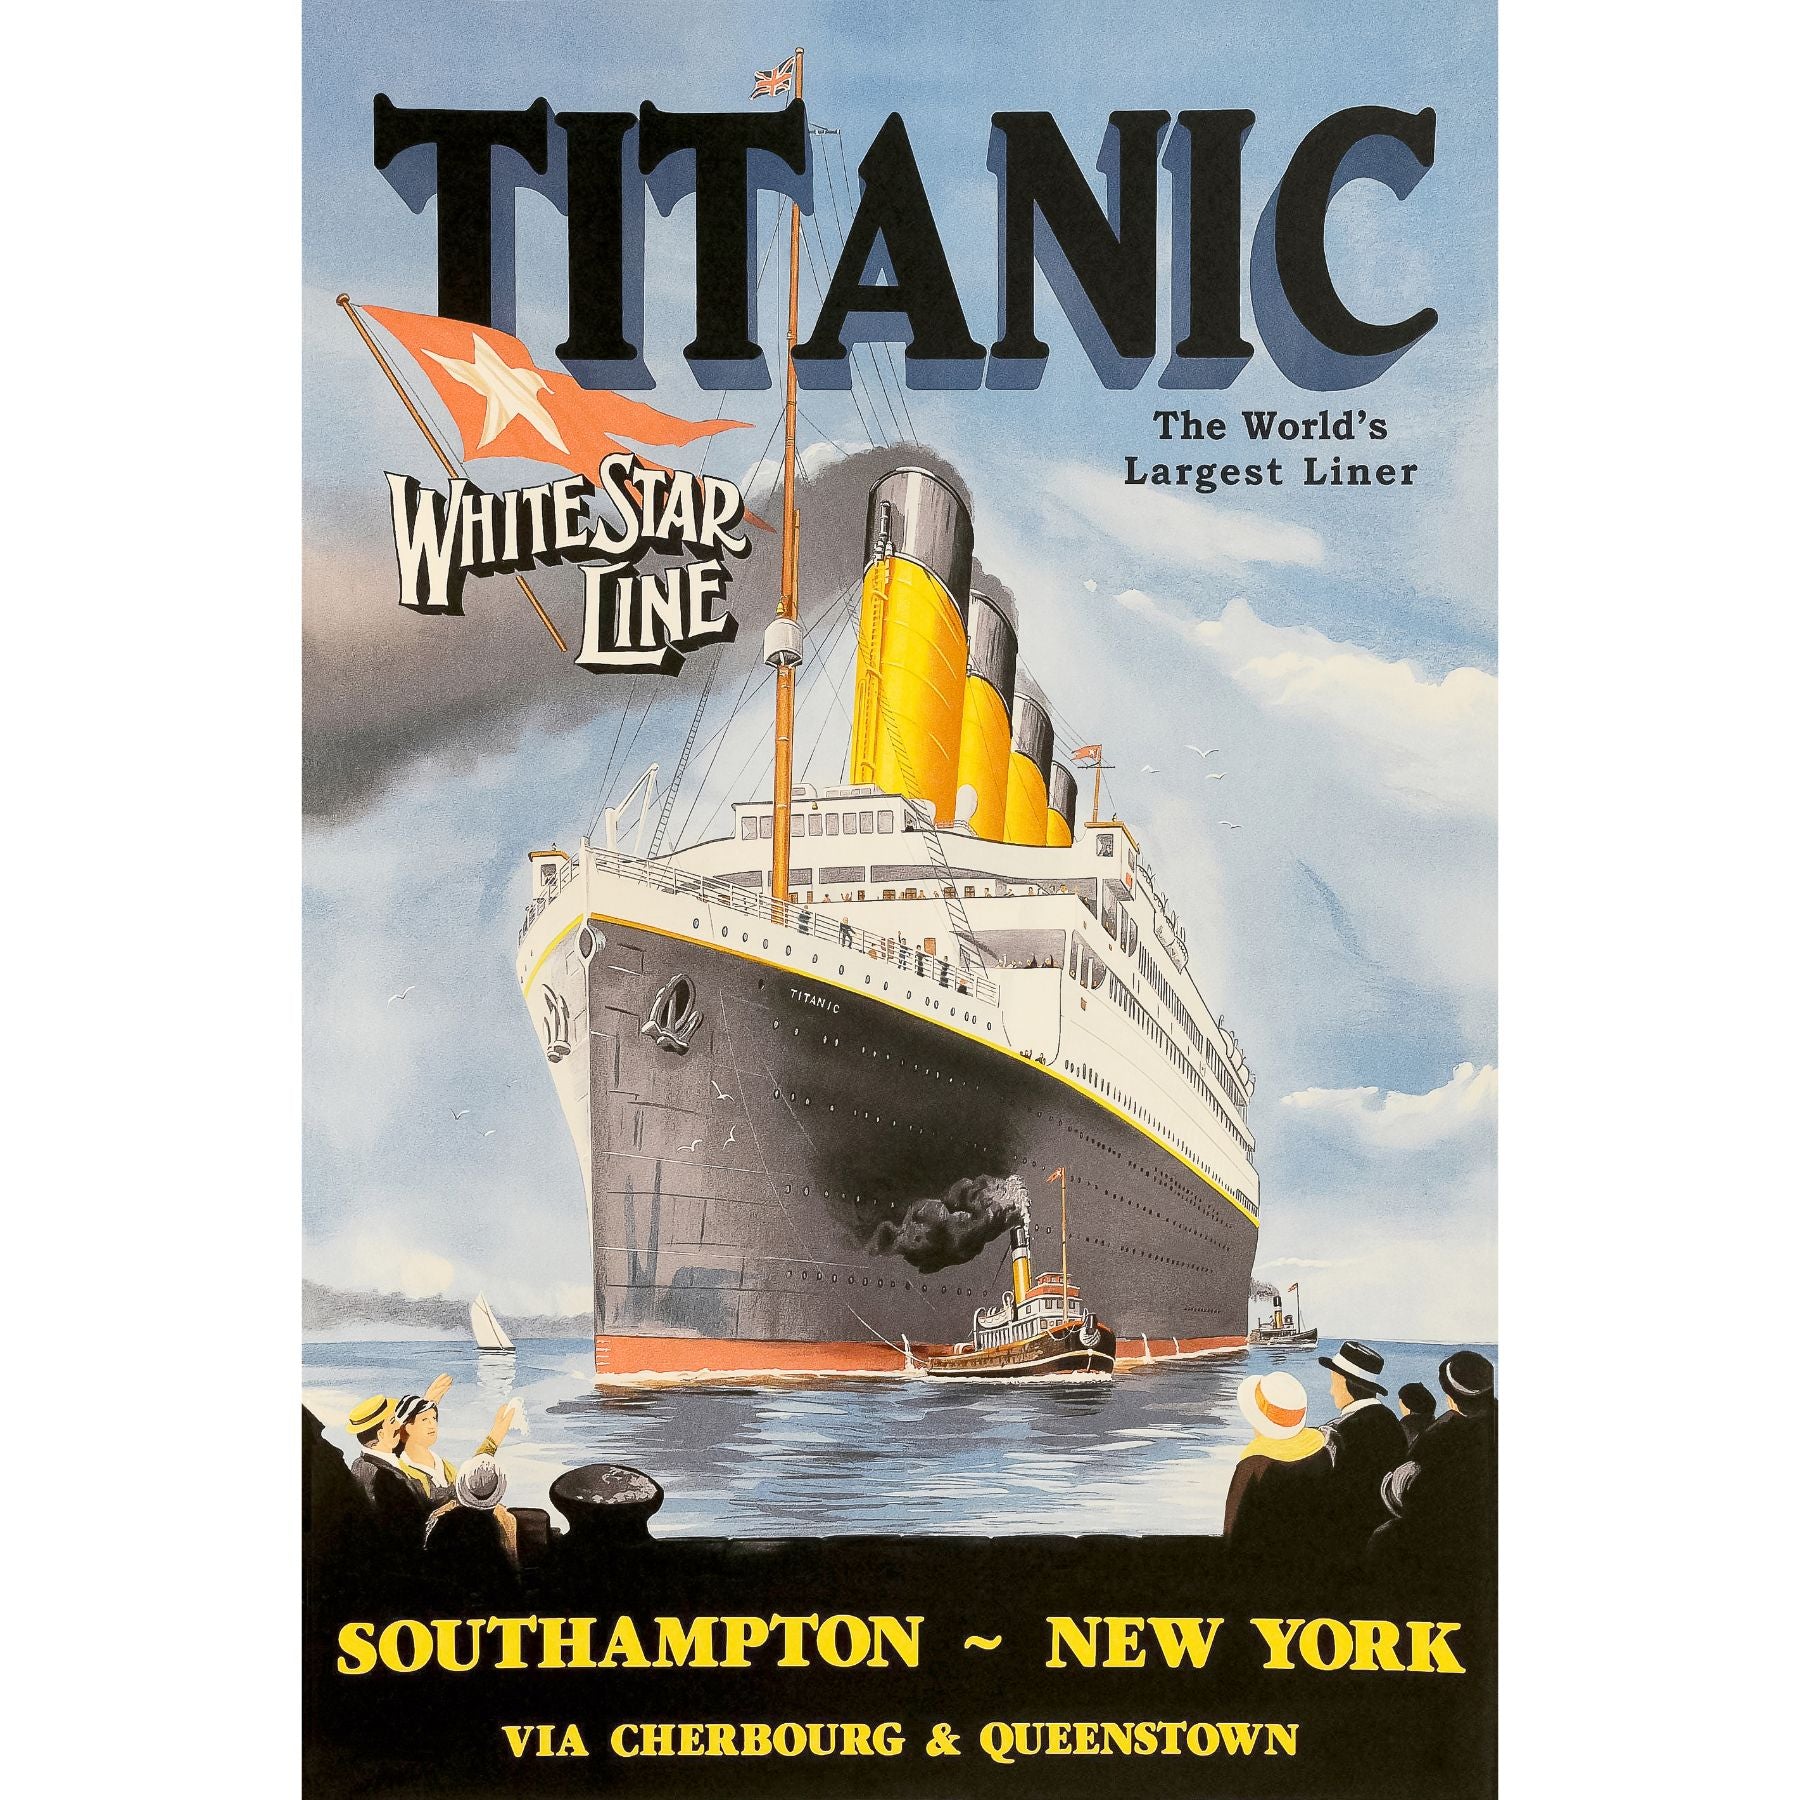 Titanic Vintage Puzzle